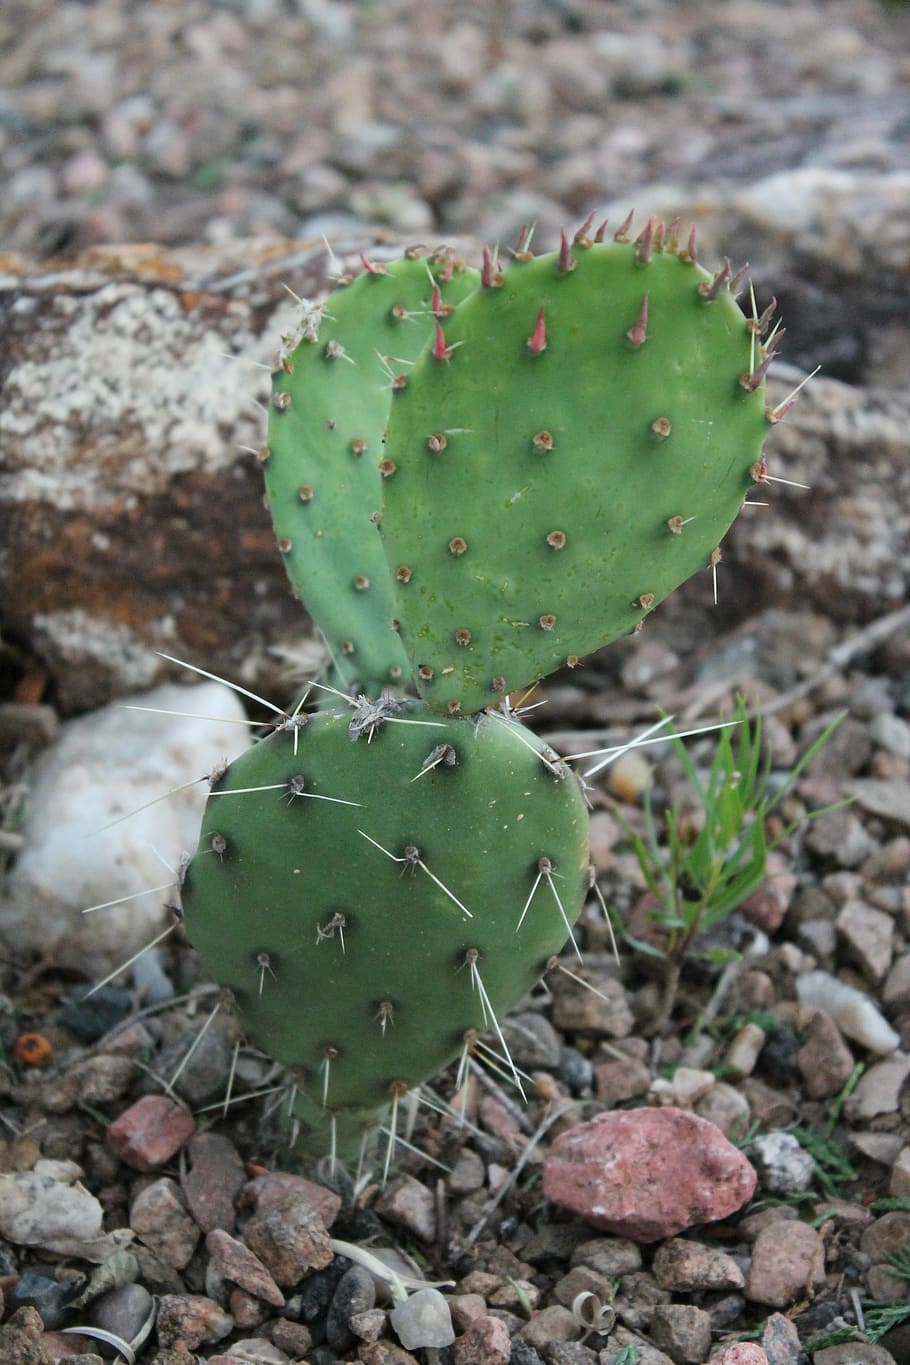 Cactus, Cacti, Southwest, Southwestern, new mexico, spike, botany, desert, desert plant, prickly